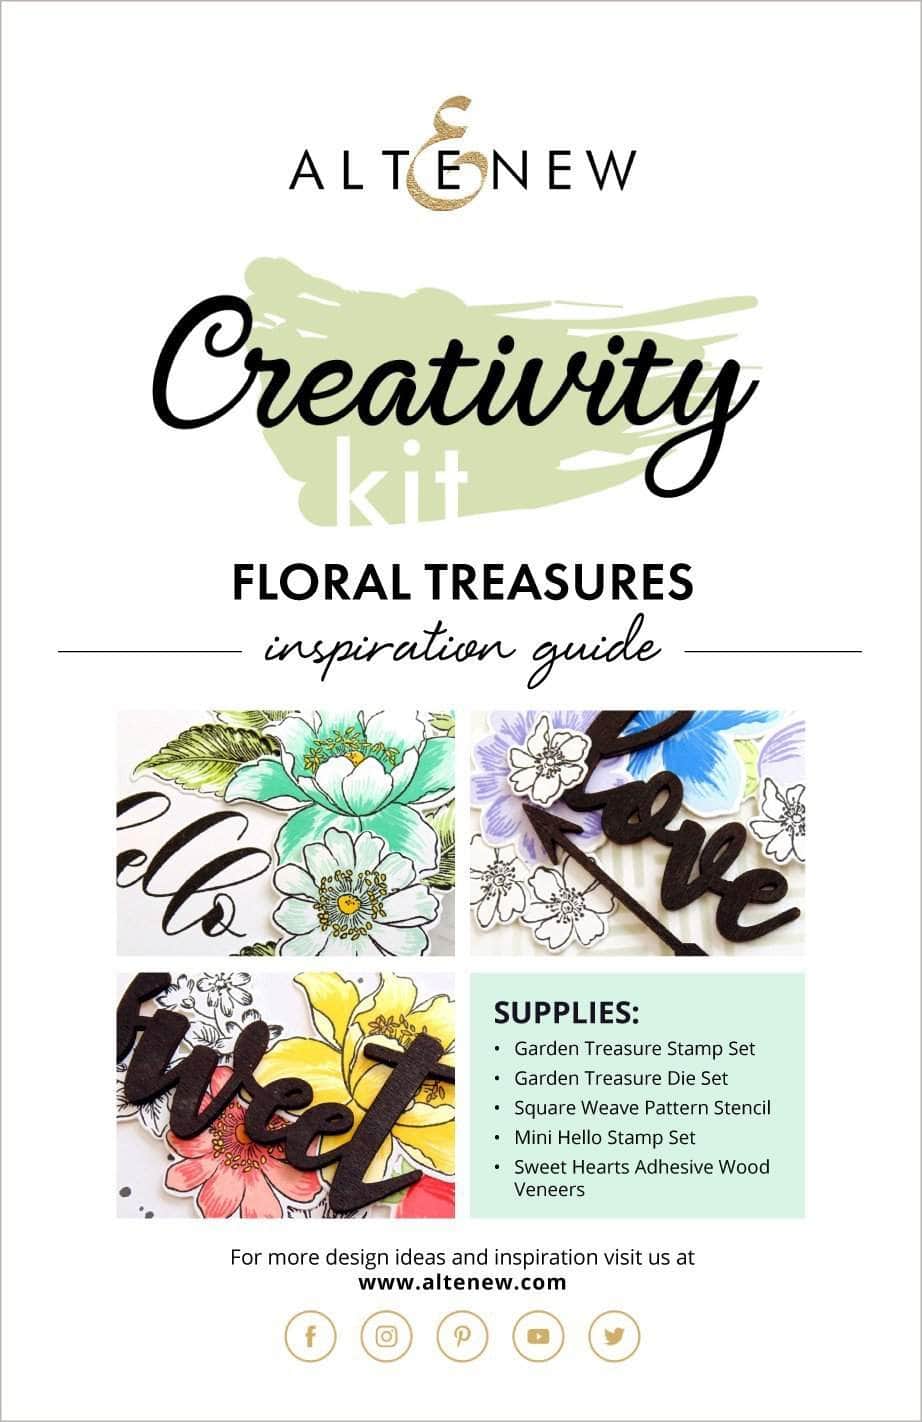 Printed Media Floral Treasures Creativity Kit Inspiration Guide